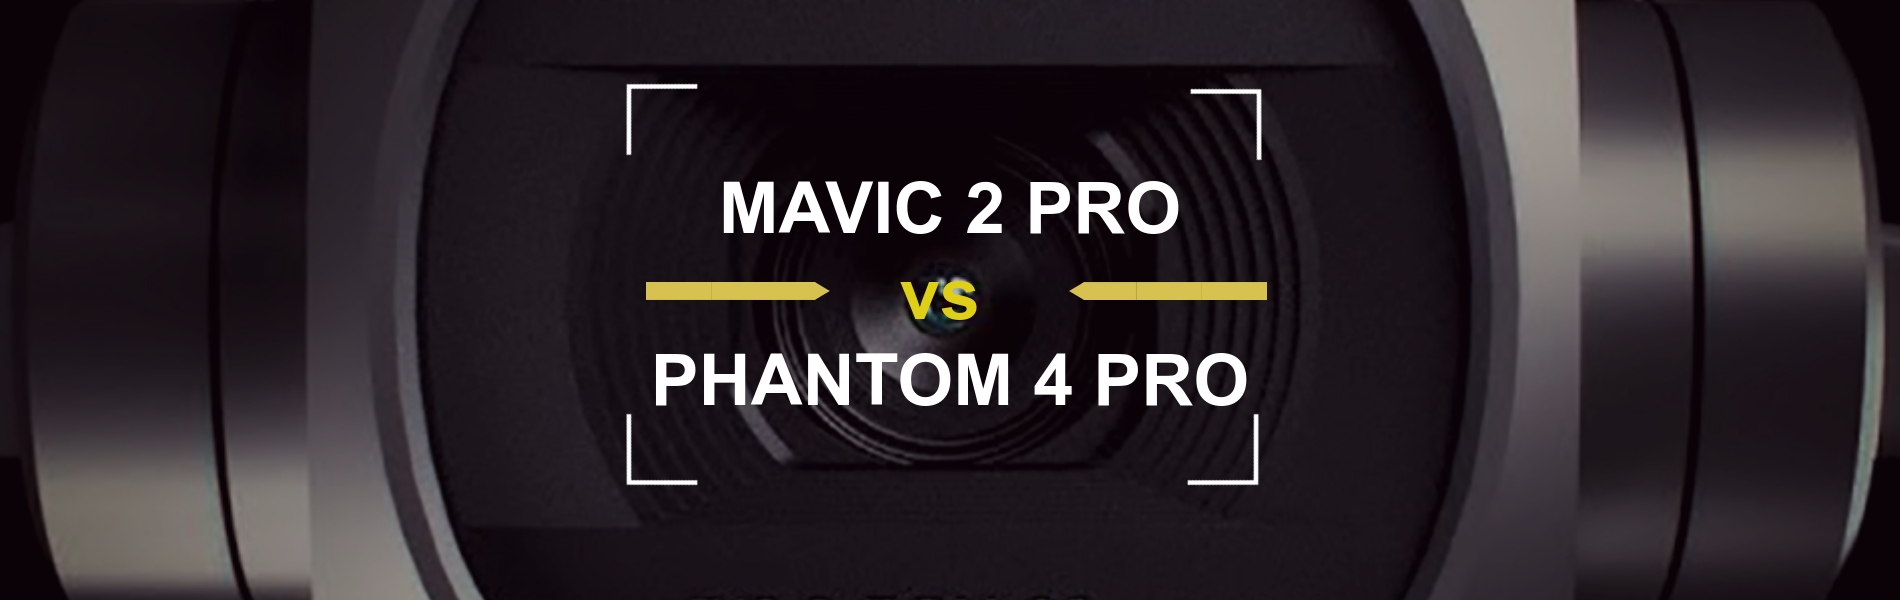 Mavic 2 Pro vs Phantom 4 Pro